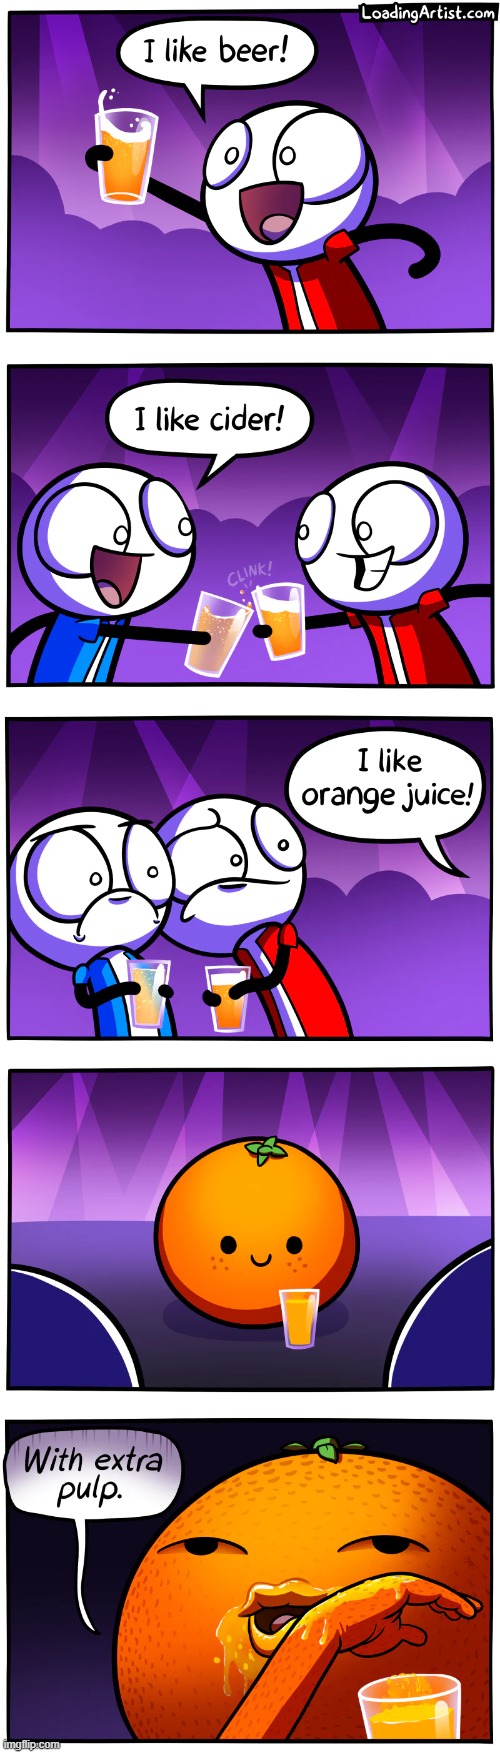 Orange Juice - Loading Artist | image tagged in orange juice,orange,loading,artist | made w/ Imgflip meme maker